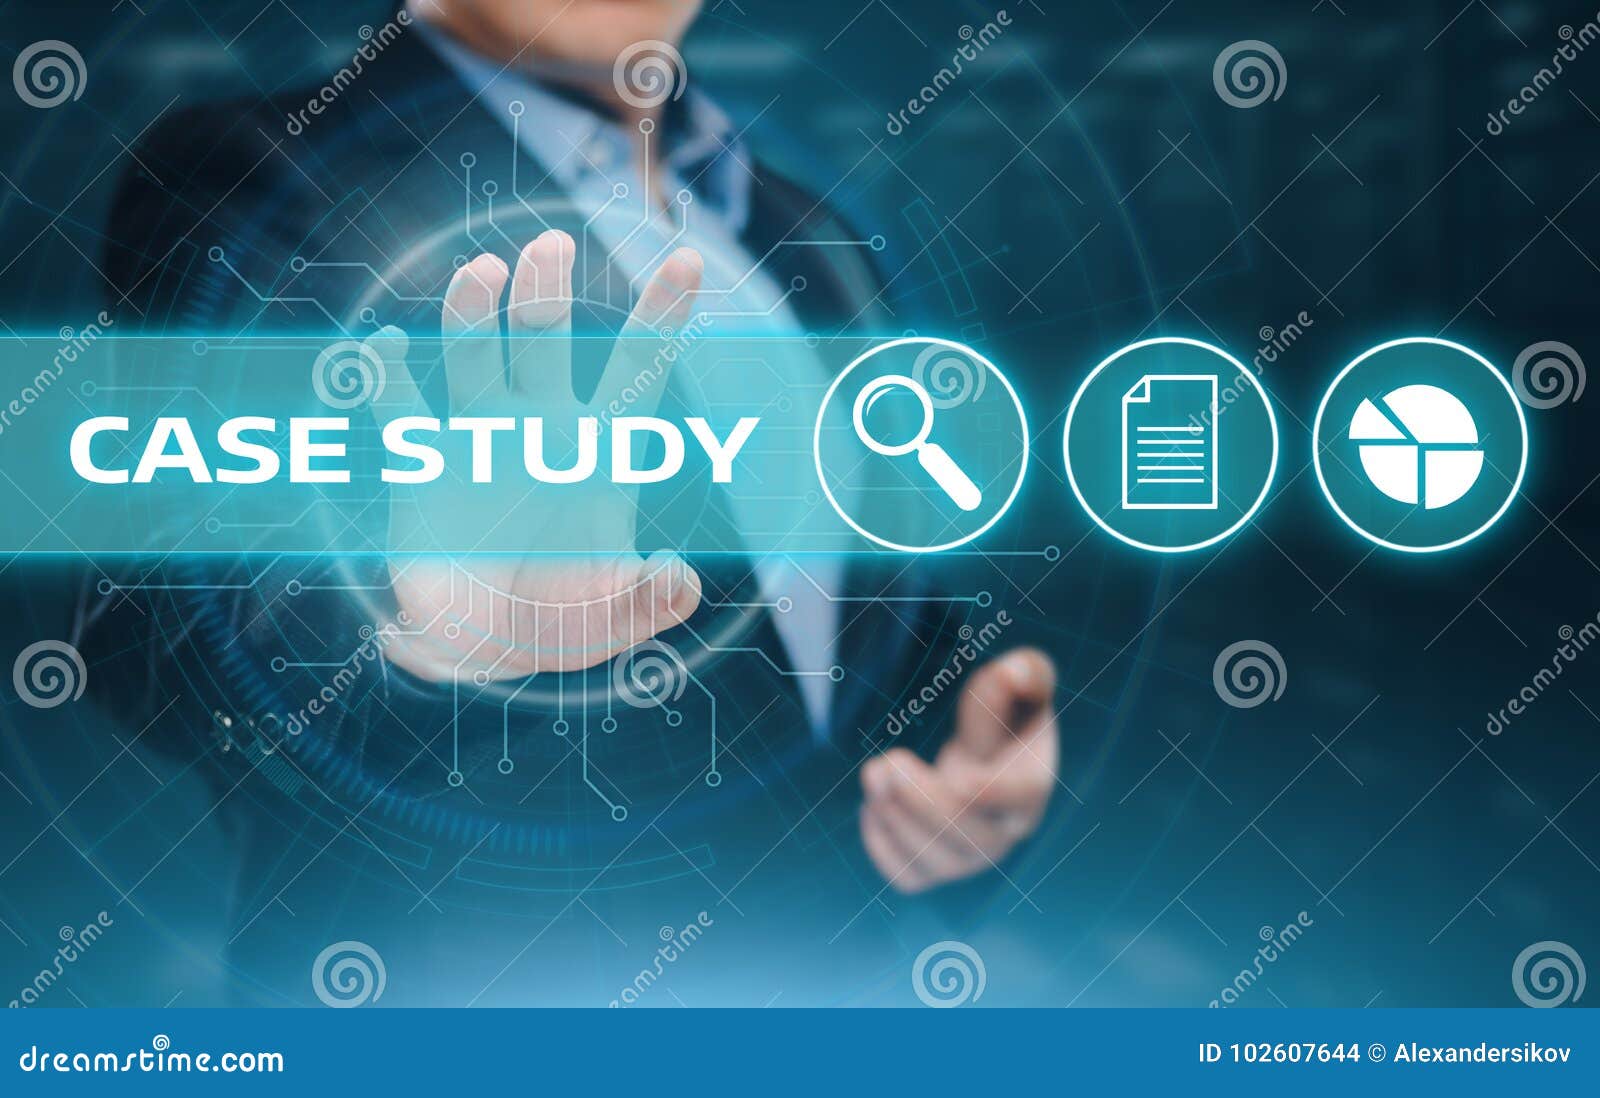 case study definition information technology